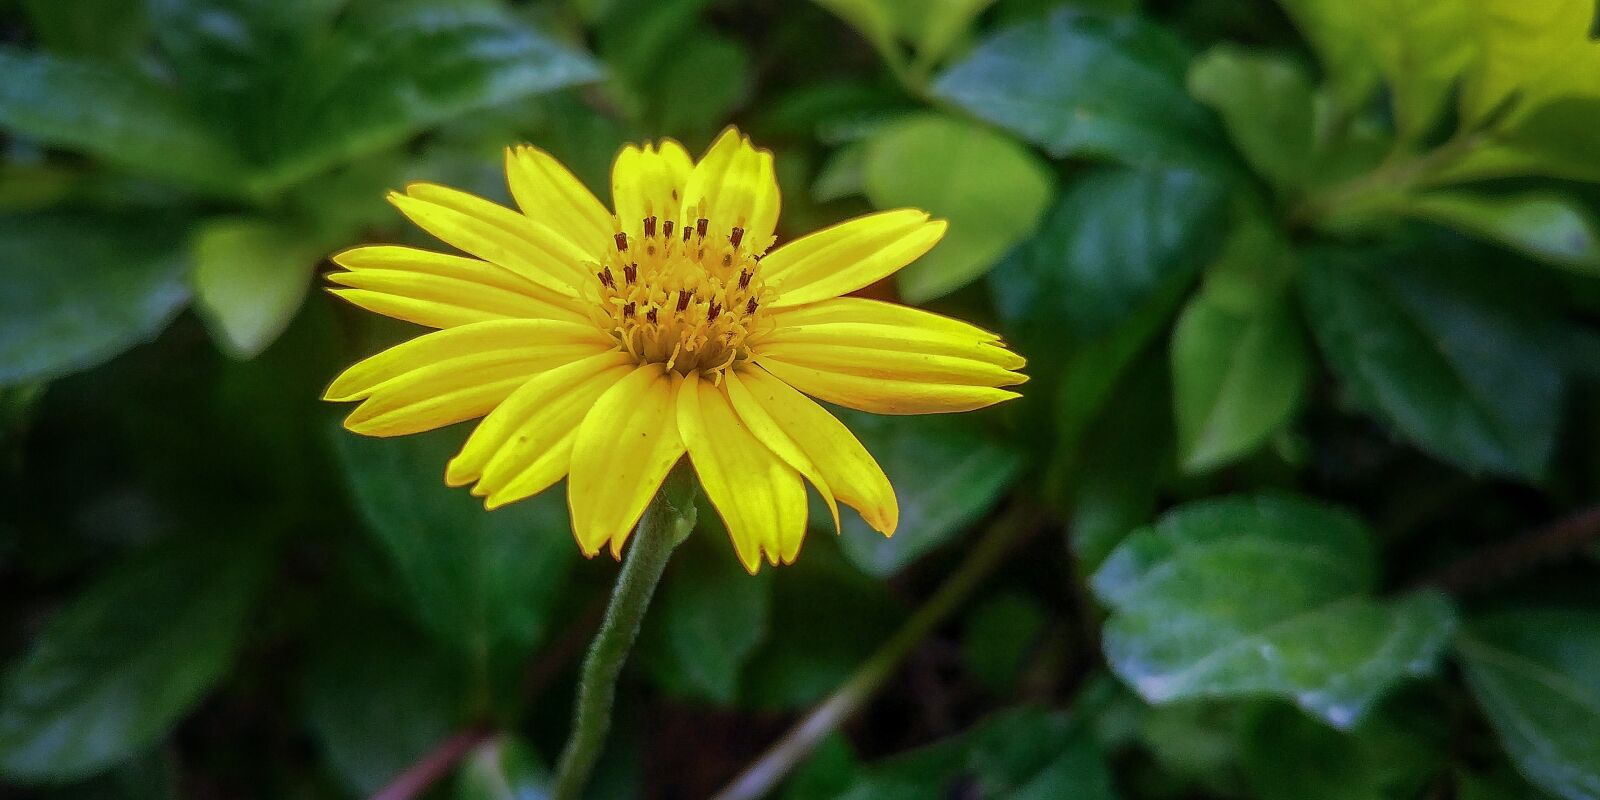 LG G6 sample photo. Flowers, nature, yellow photography